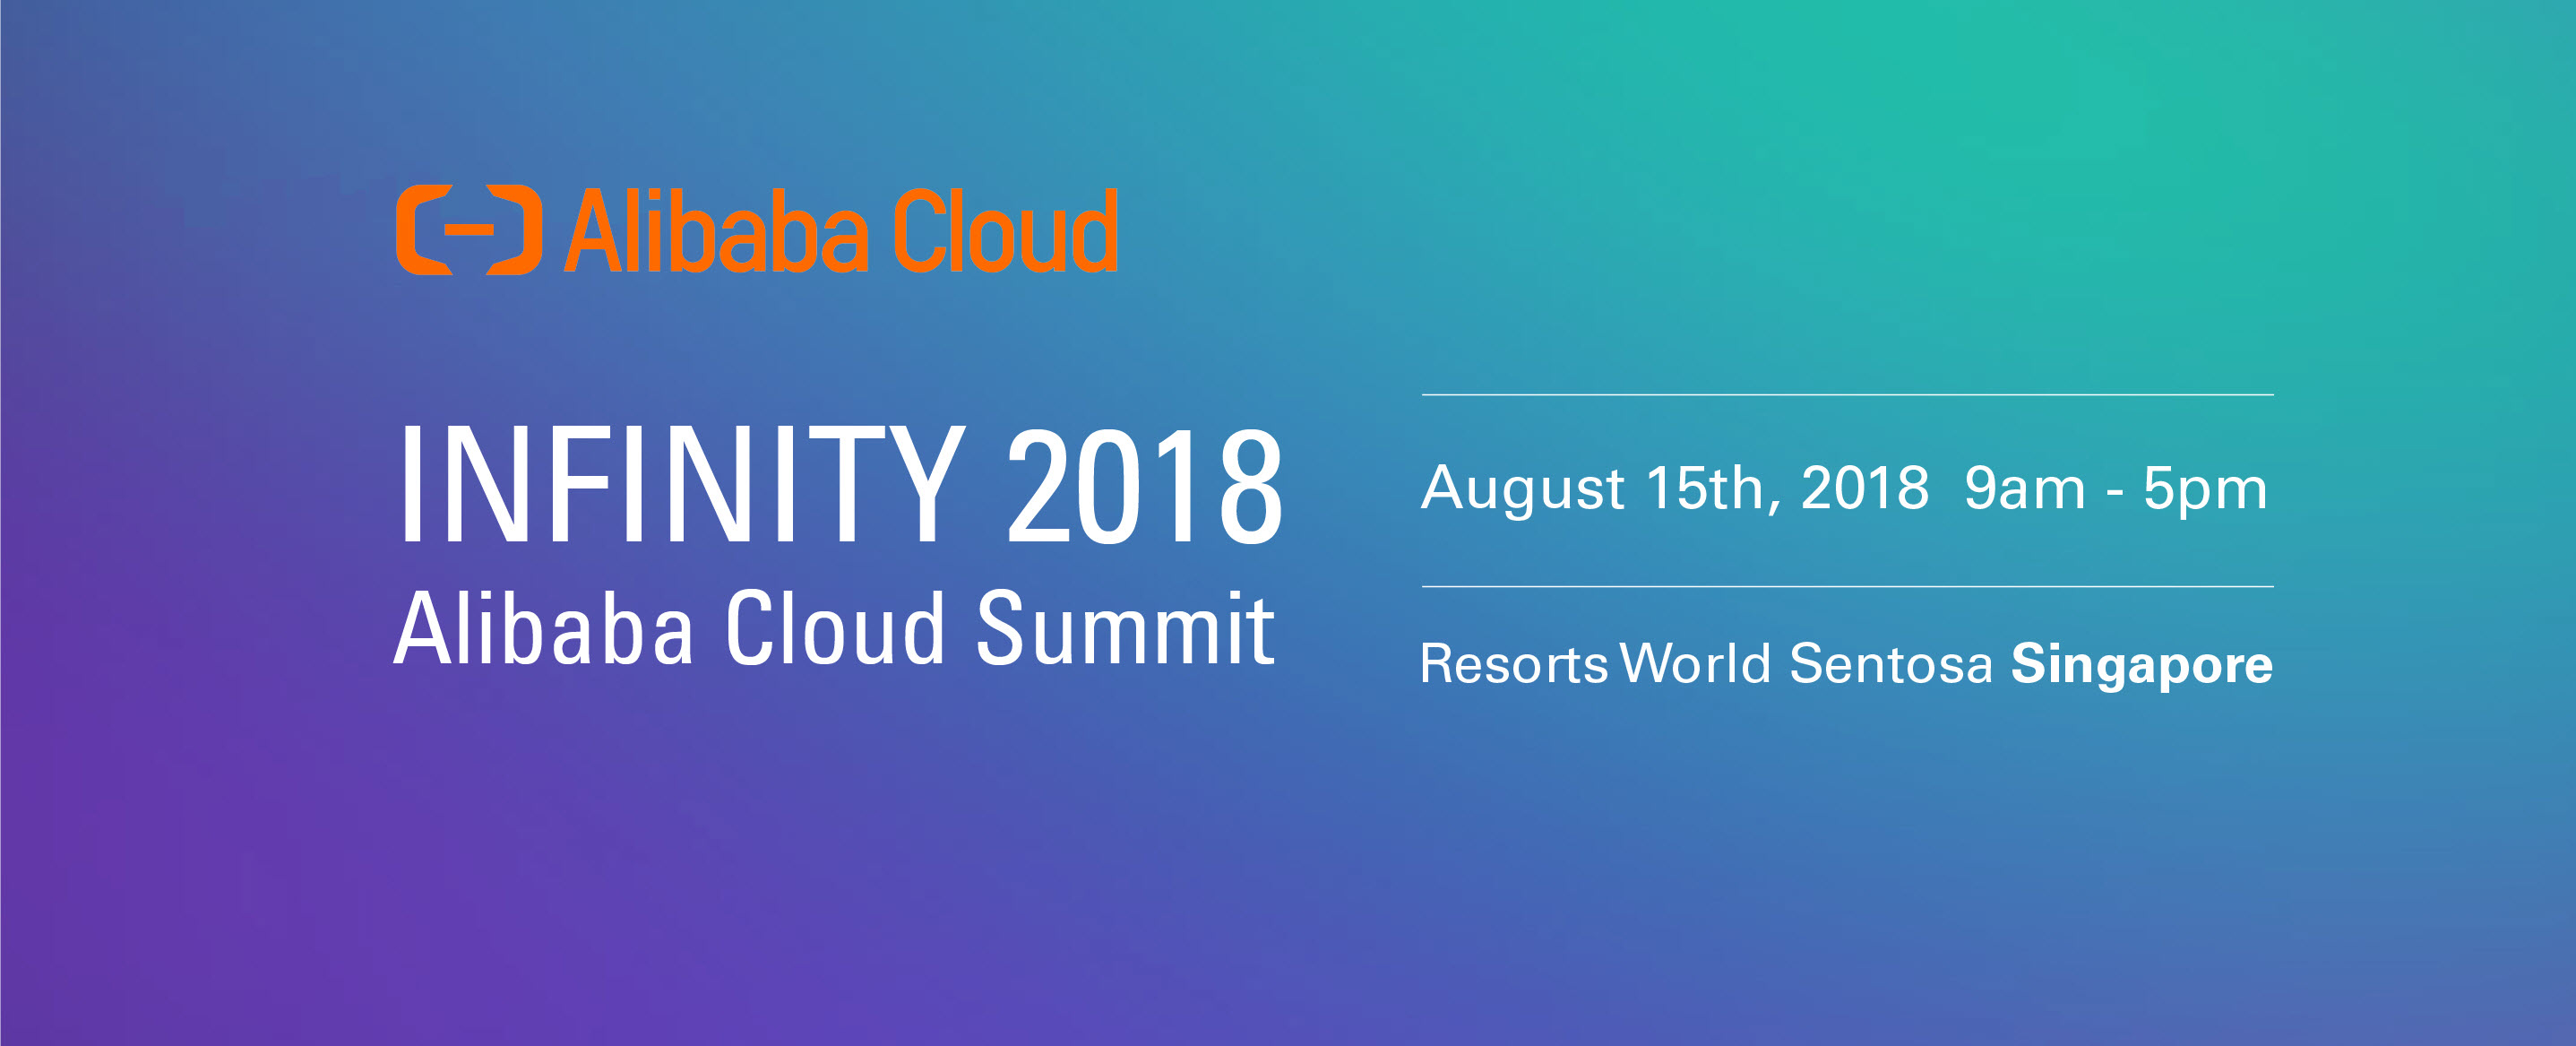 Alibaba Cloud Summit [Infinity 2018]